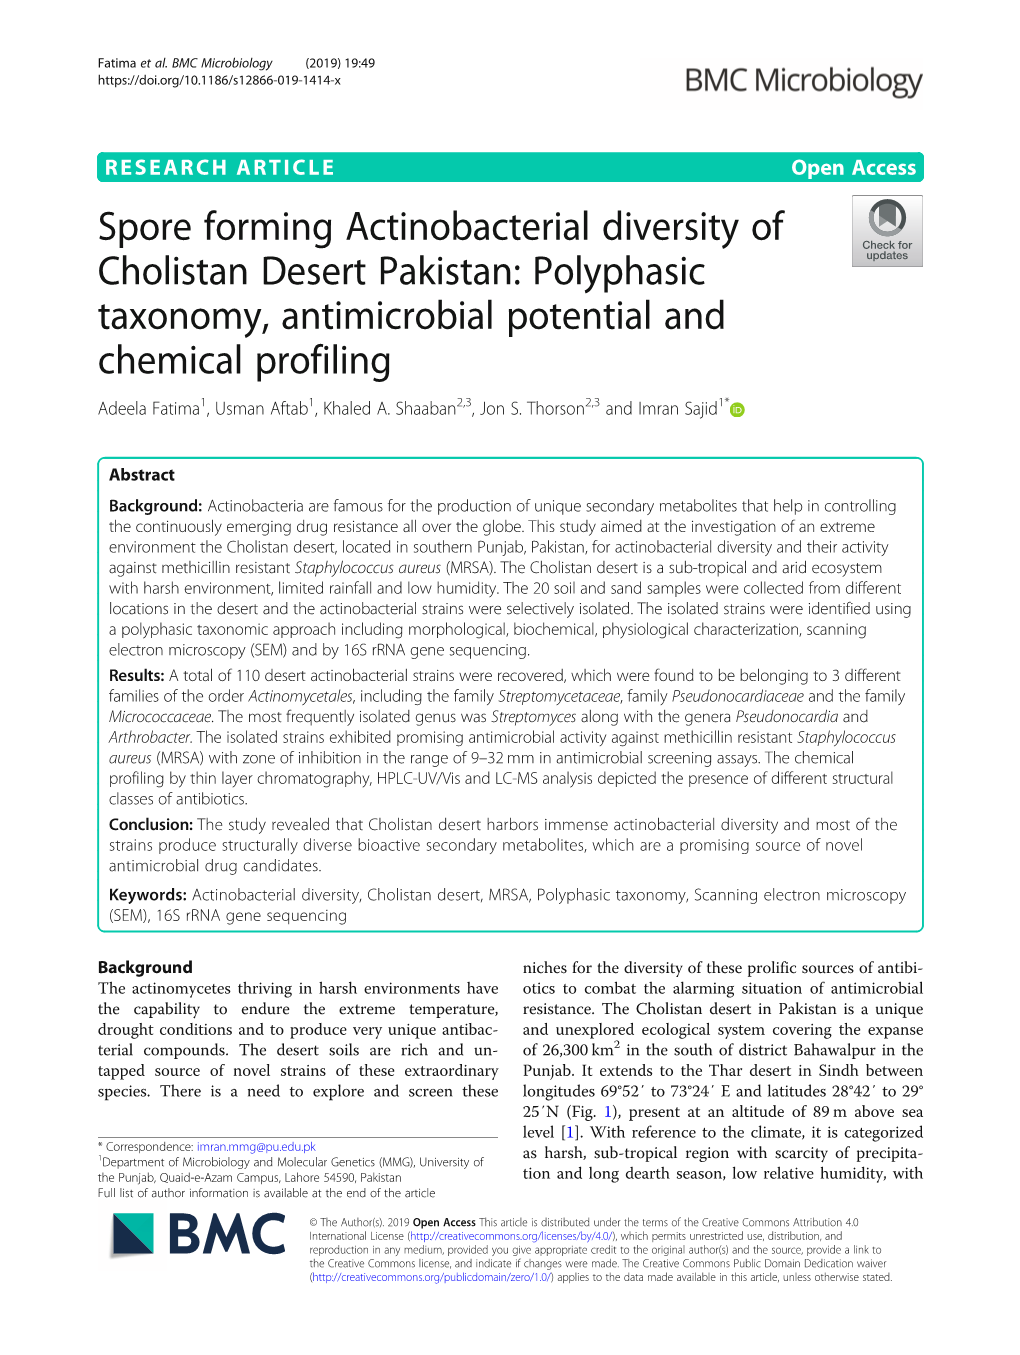 Spore Forming Actinobacterial Diversity of Cholistan Desert Pakistan